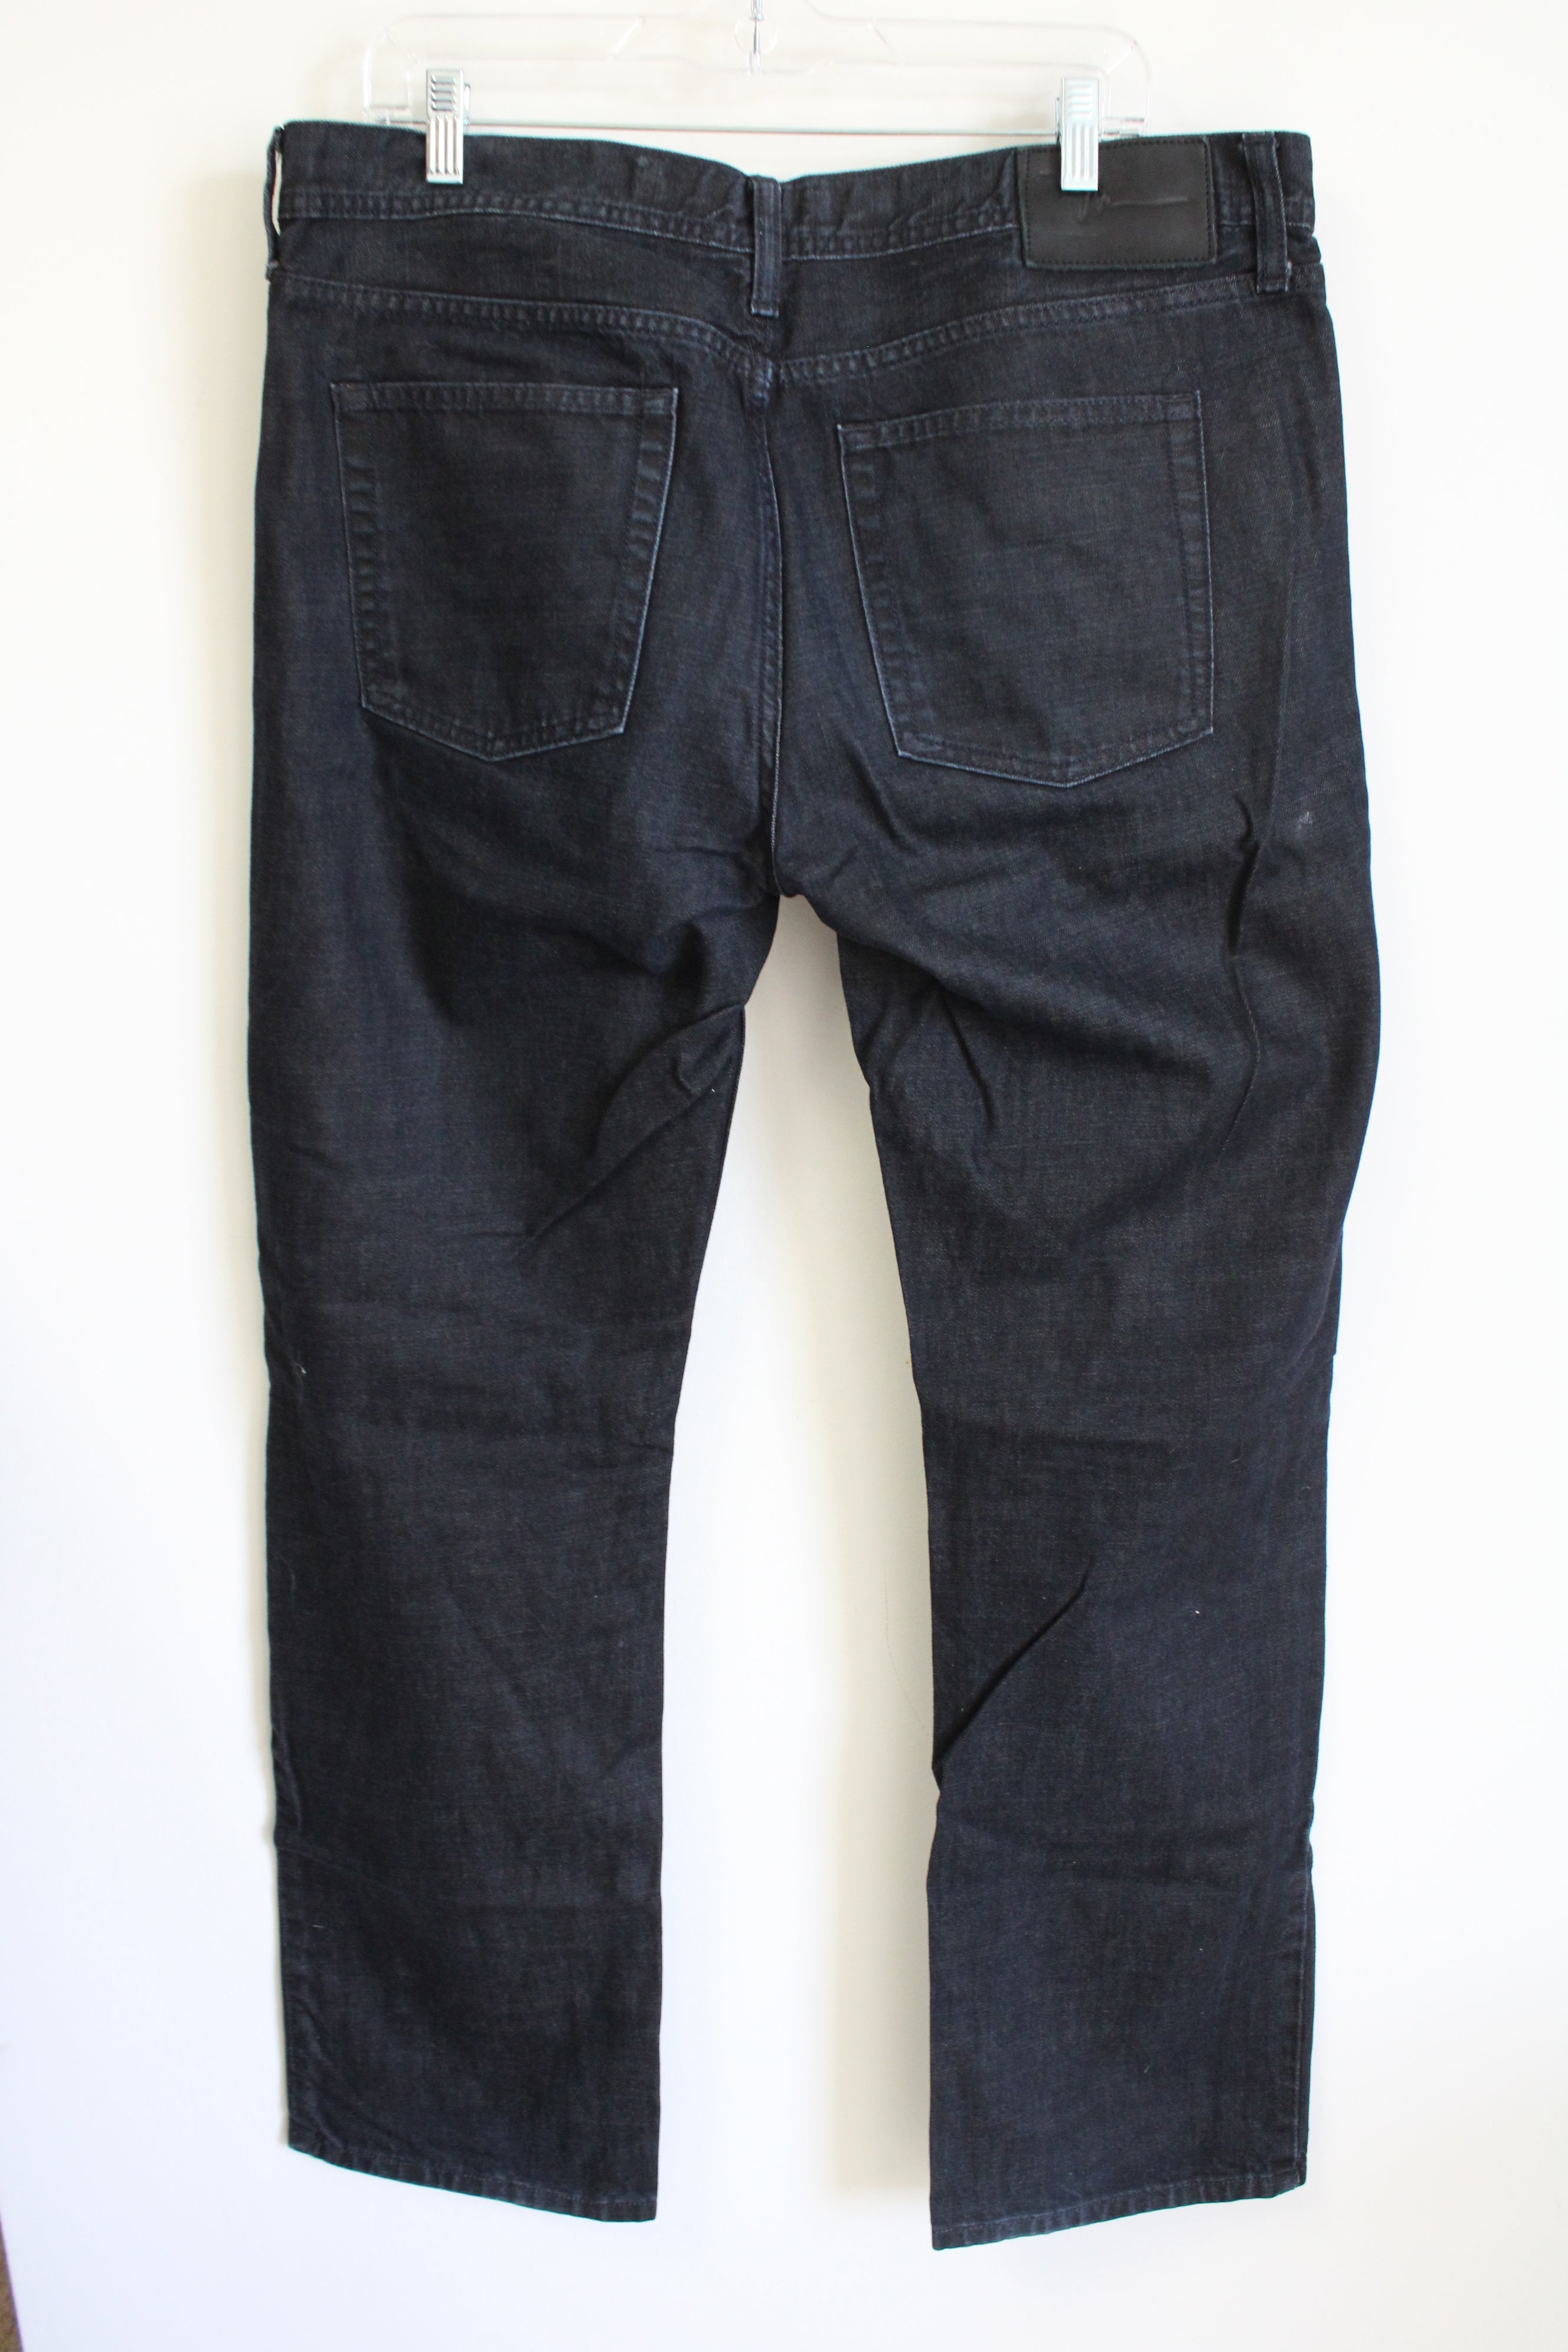 Marc Anthony Slim Fit Dark Wash Jeans | 36x34